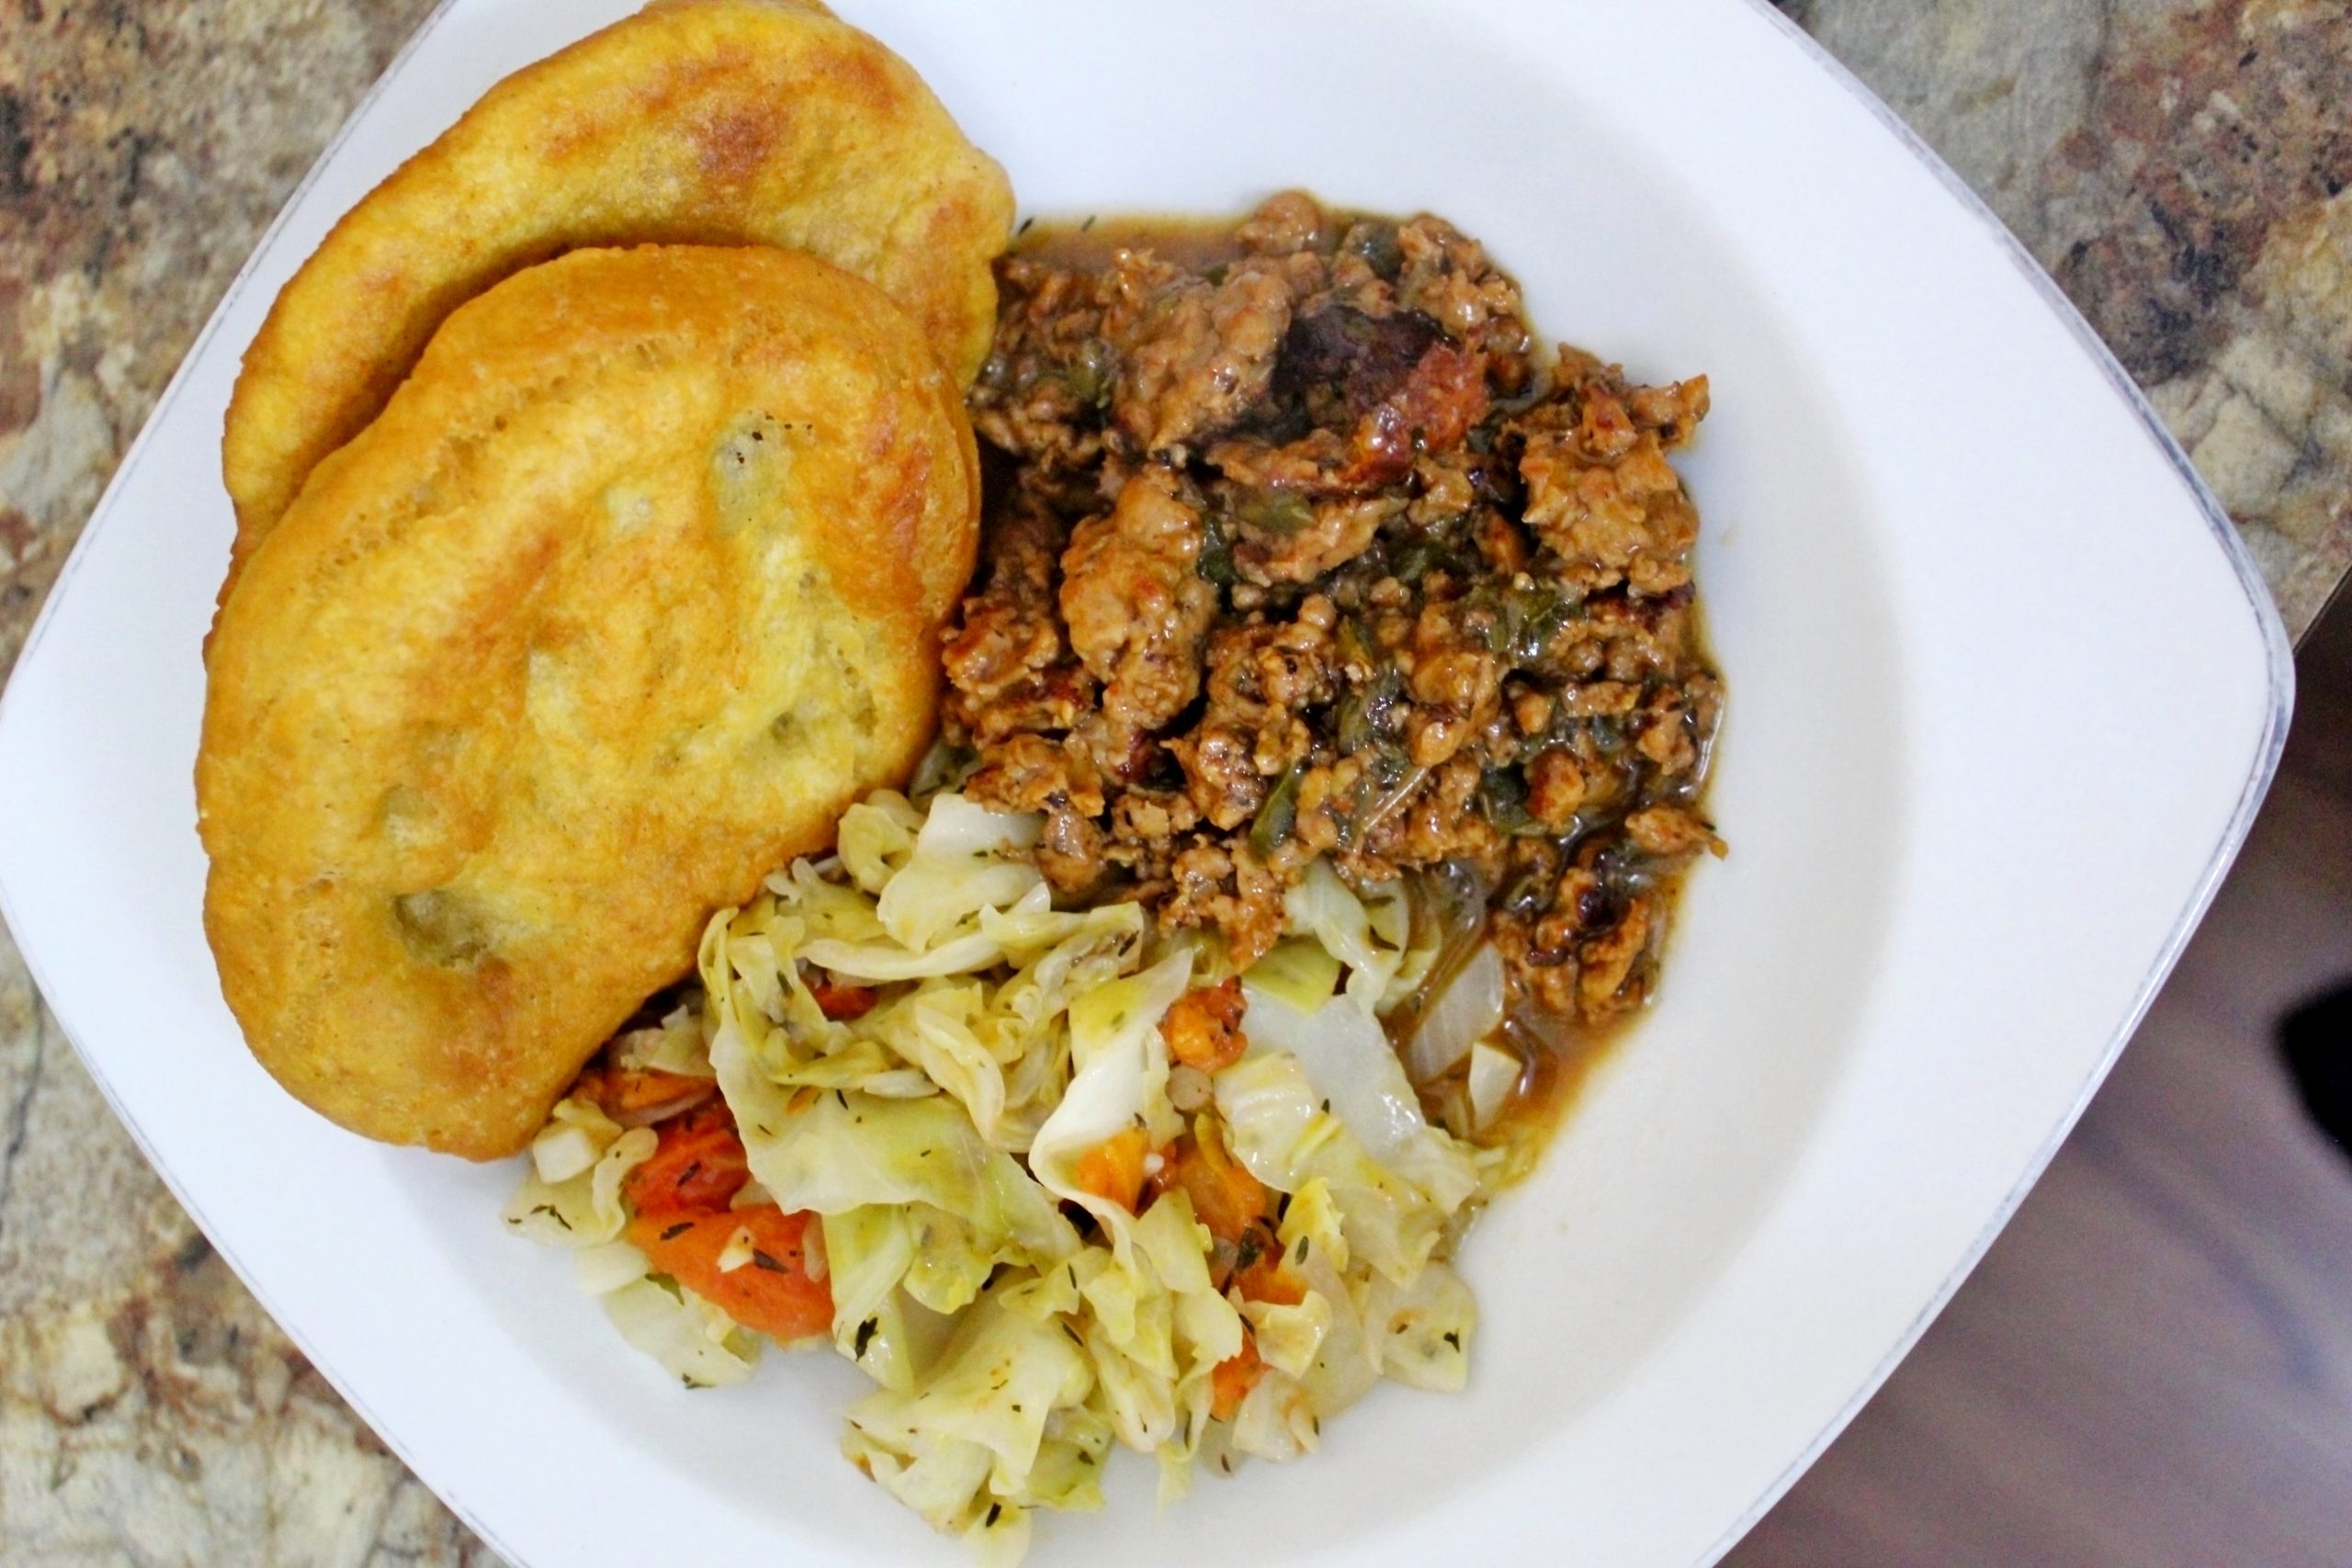 jamaica food festival essay